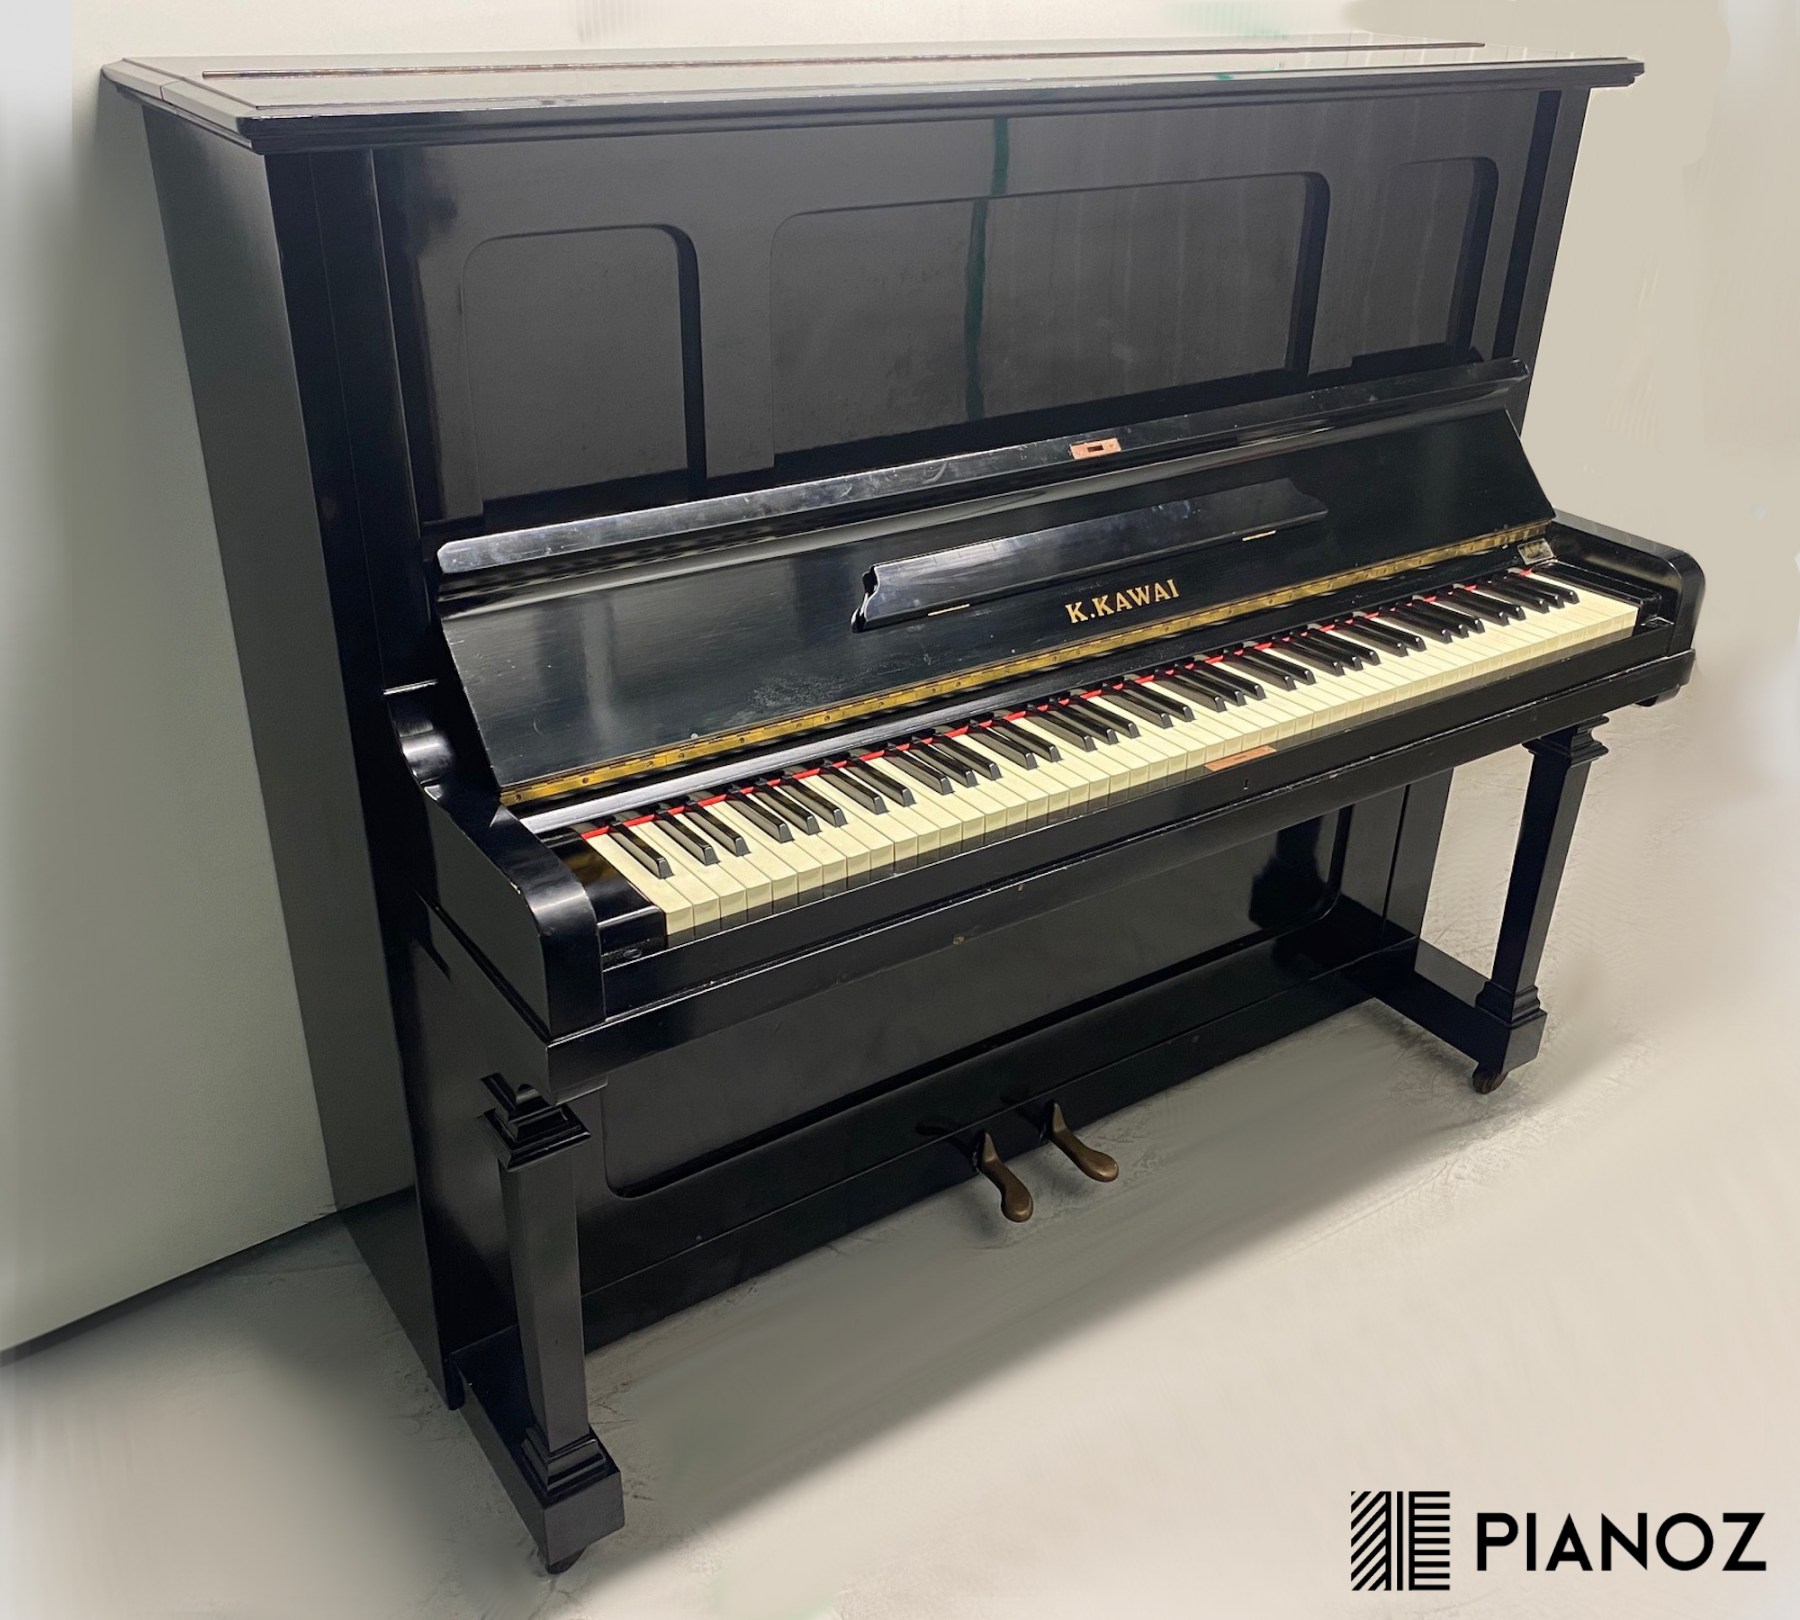 K. Kawai Model 350 Upright Piano piano for sale in UK